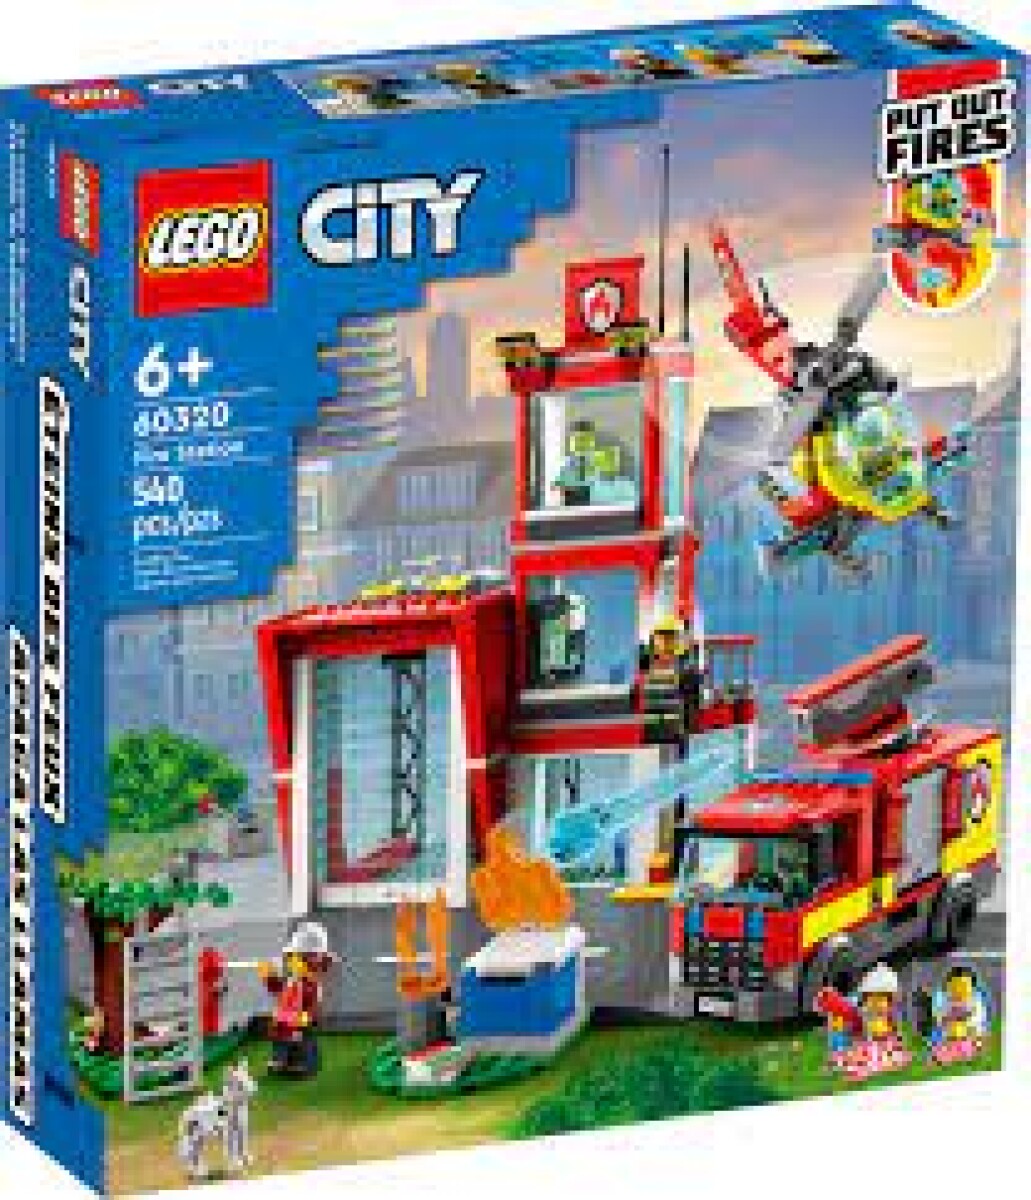 Lego Estacion de Bomberos 60320 